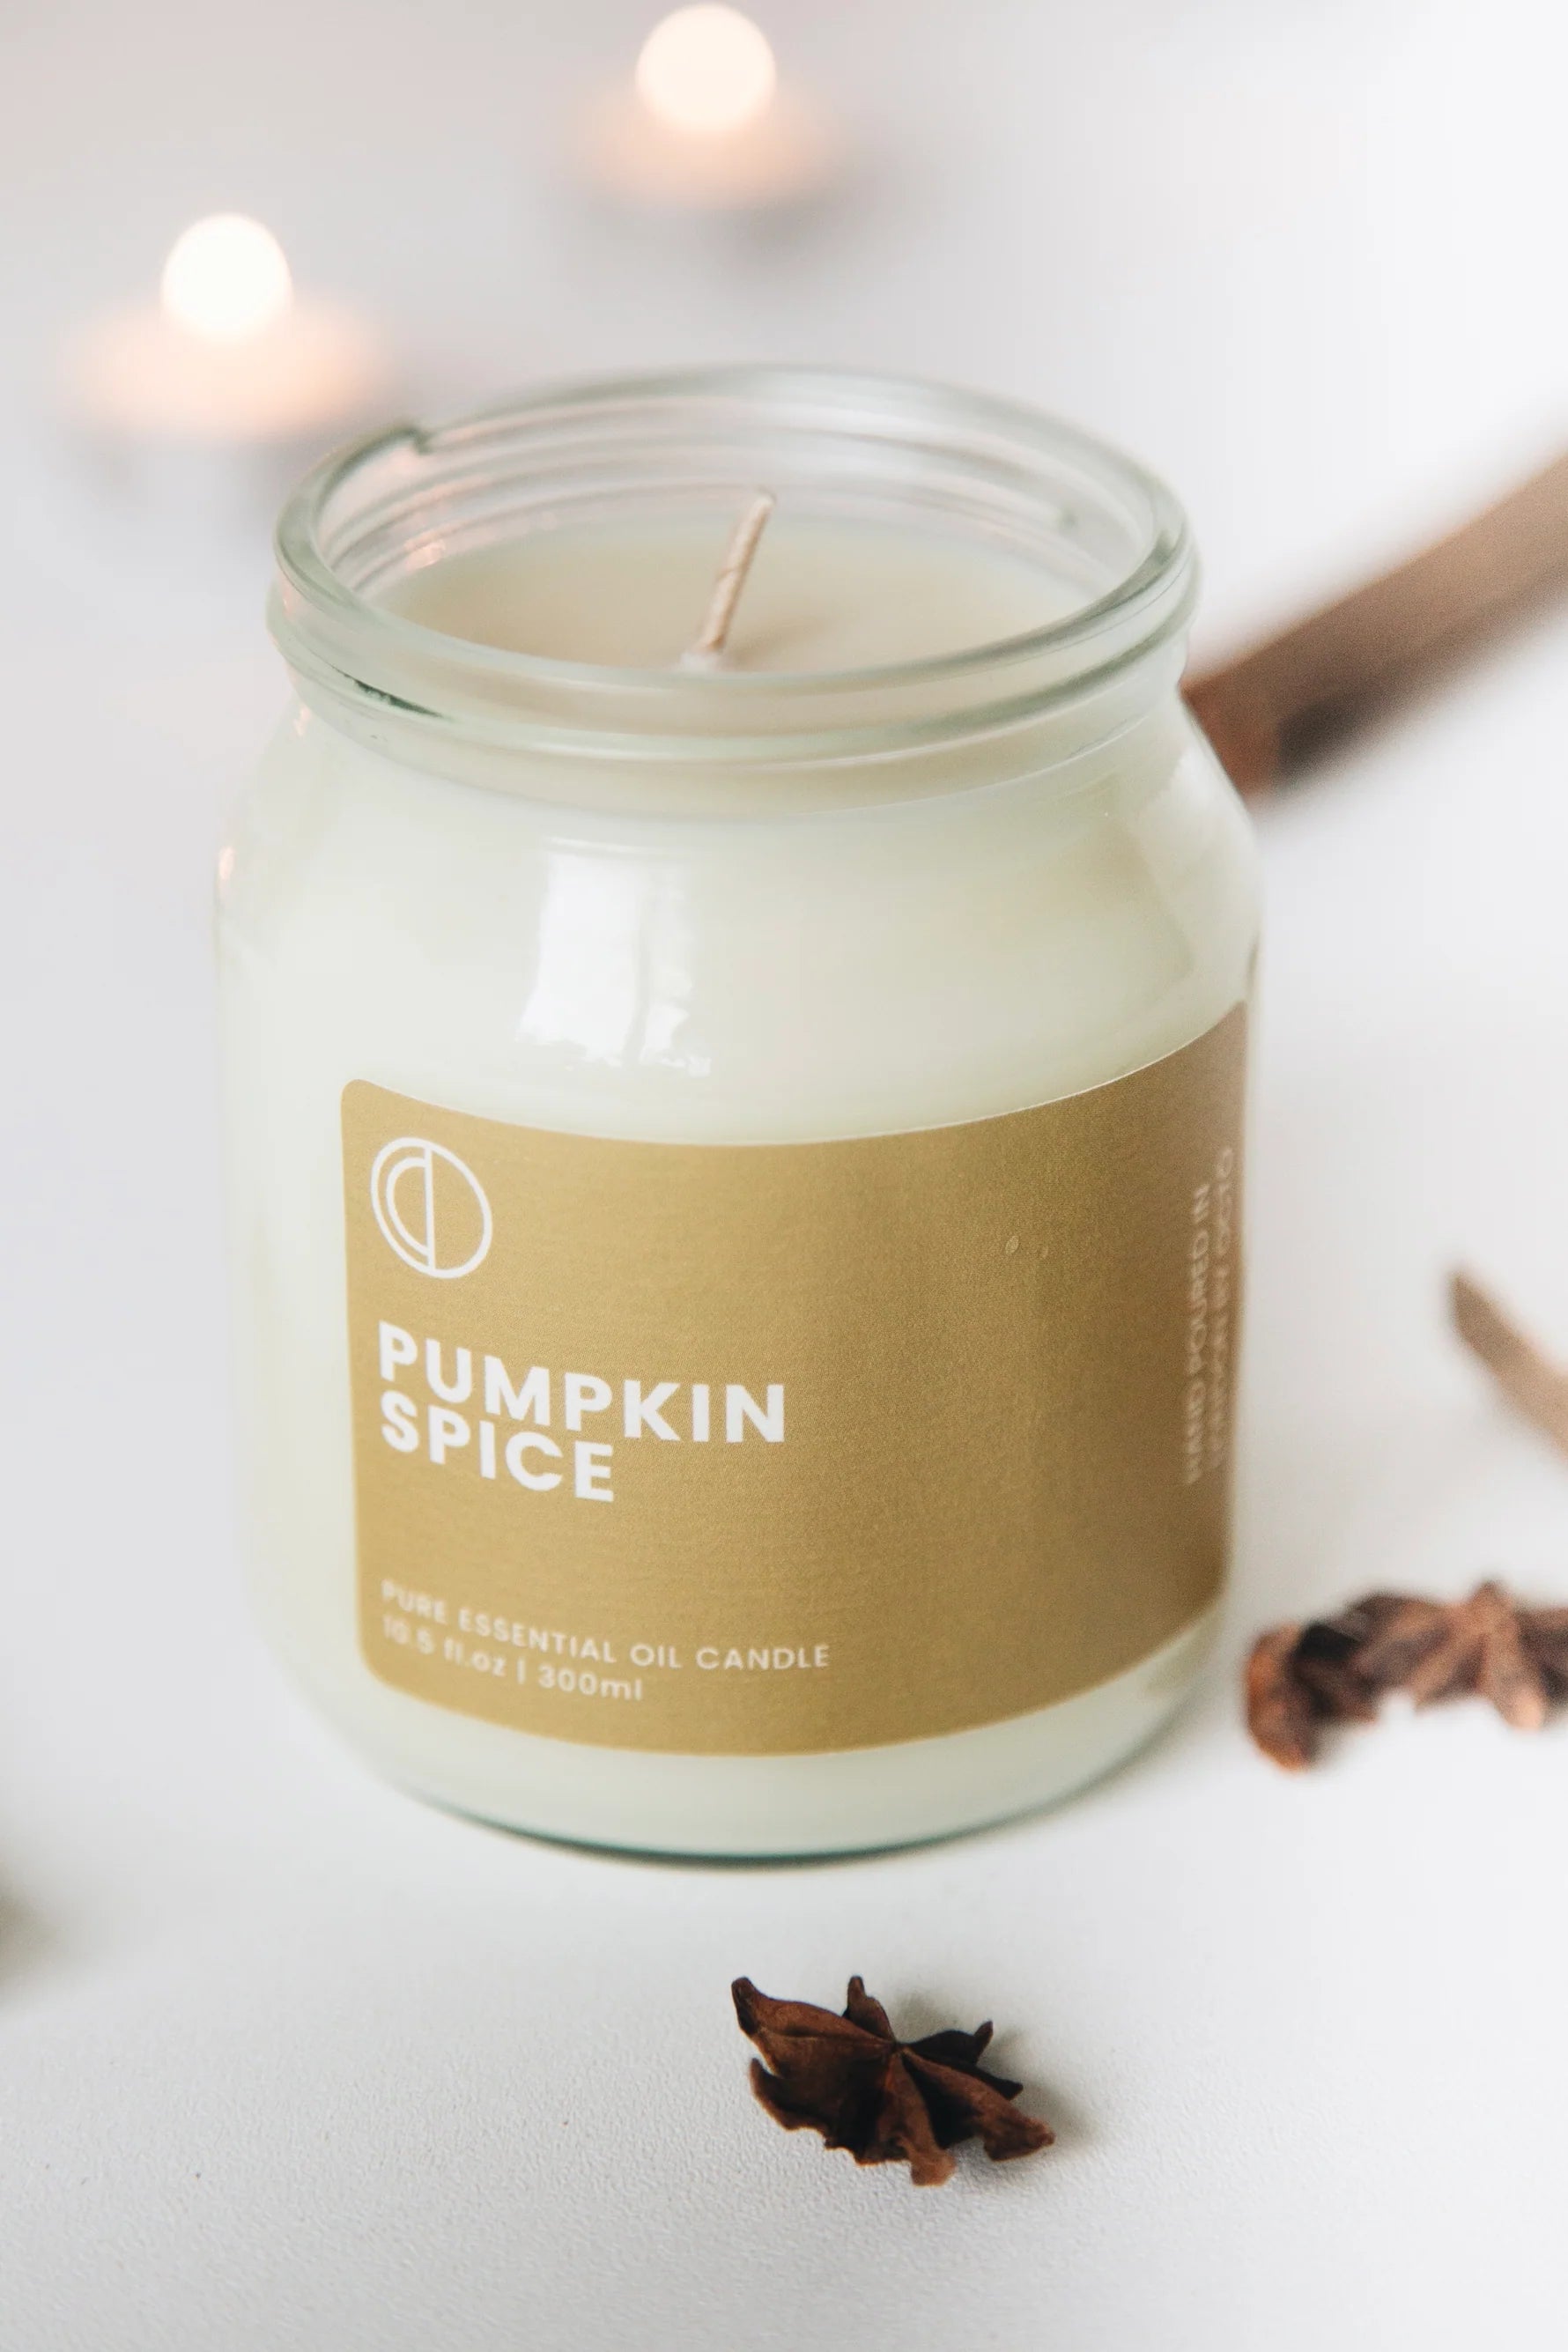 Pumpkin Spice Candle (300ml)